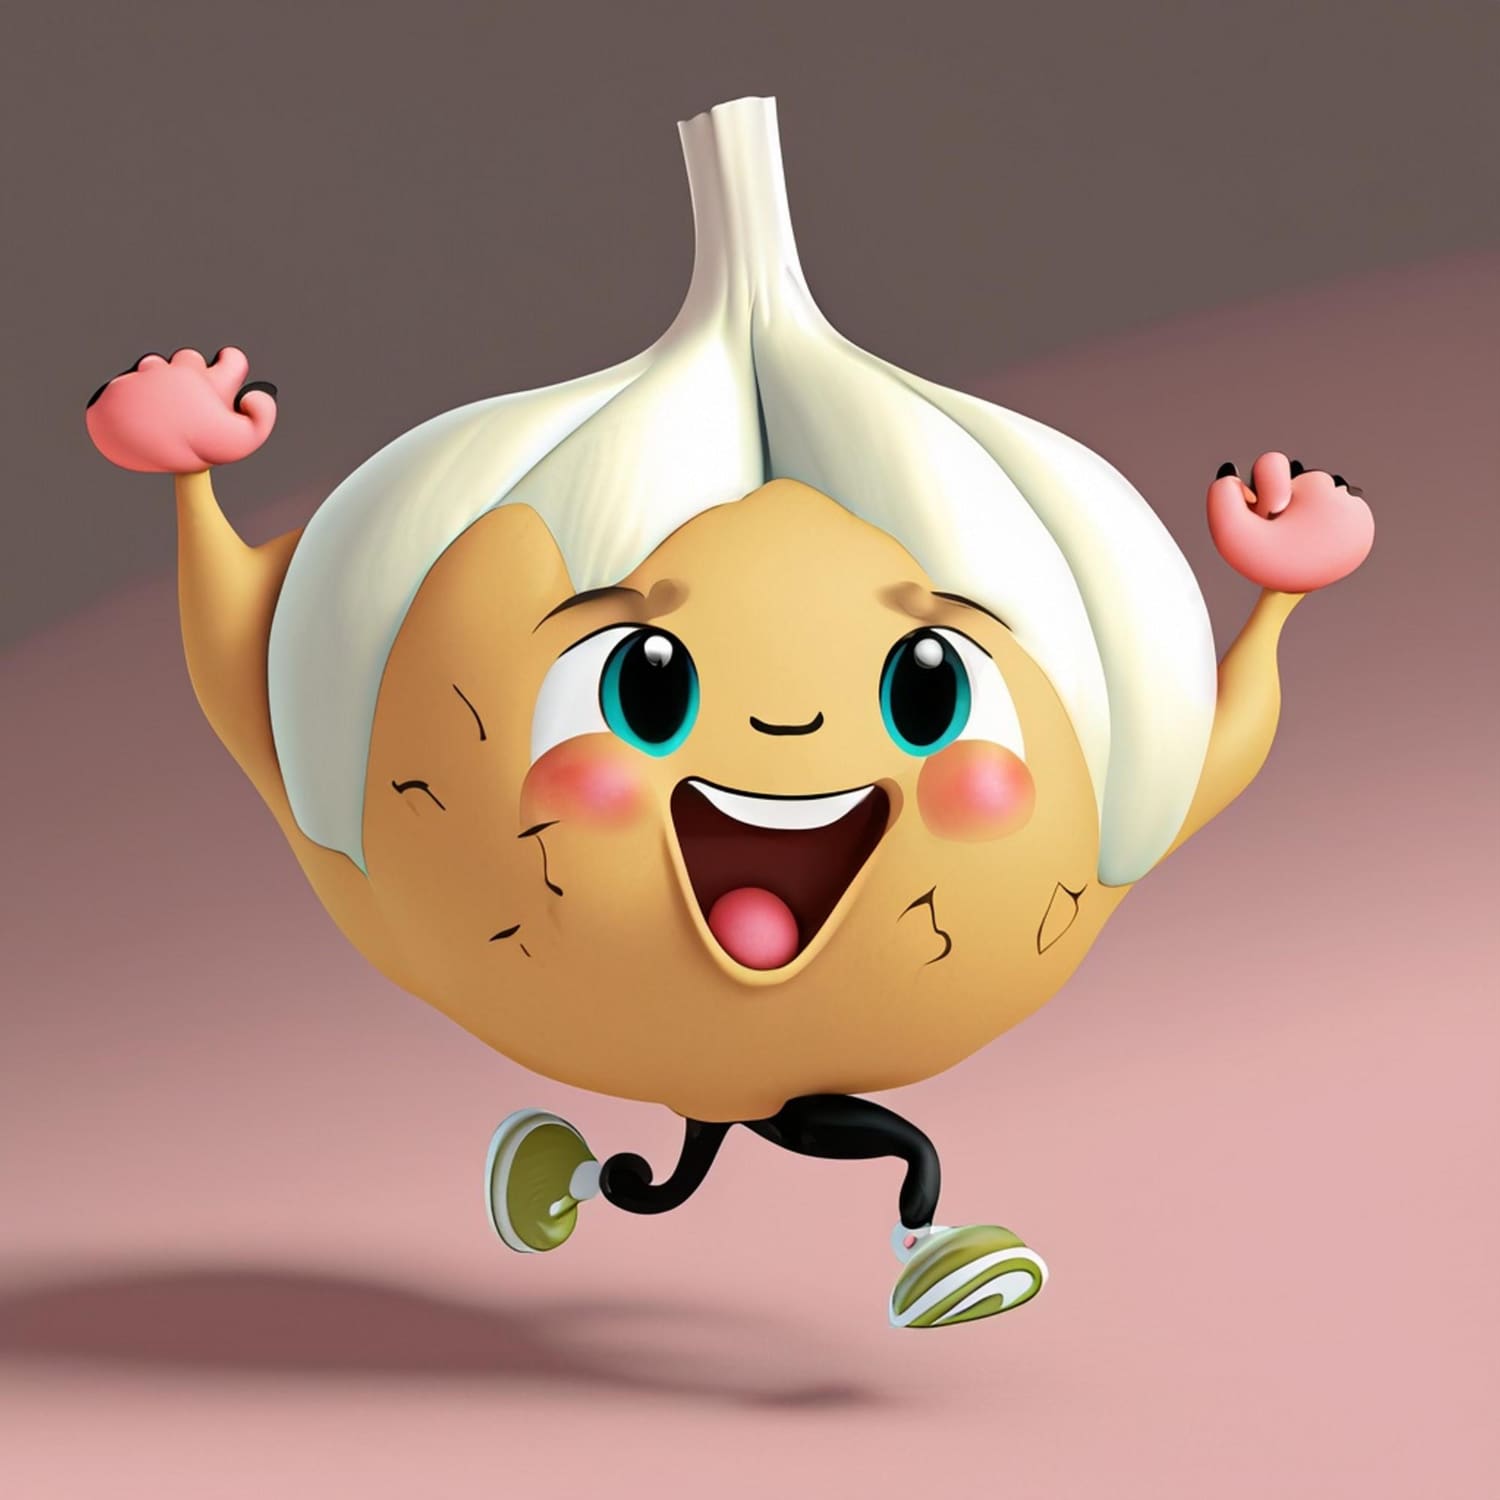 Cartoon graphic of a cheerful garlic bulb waving hello.